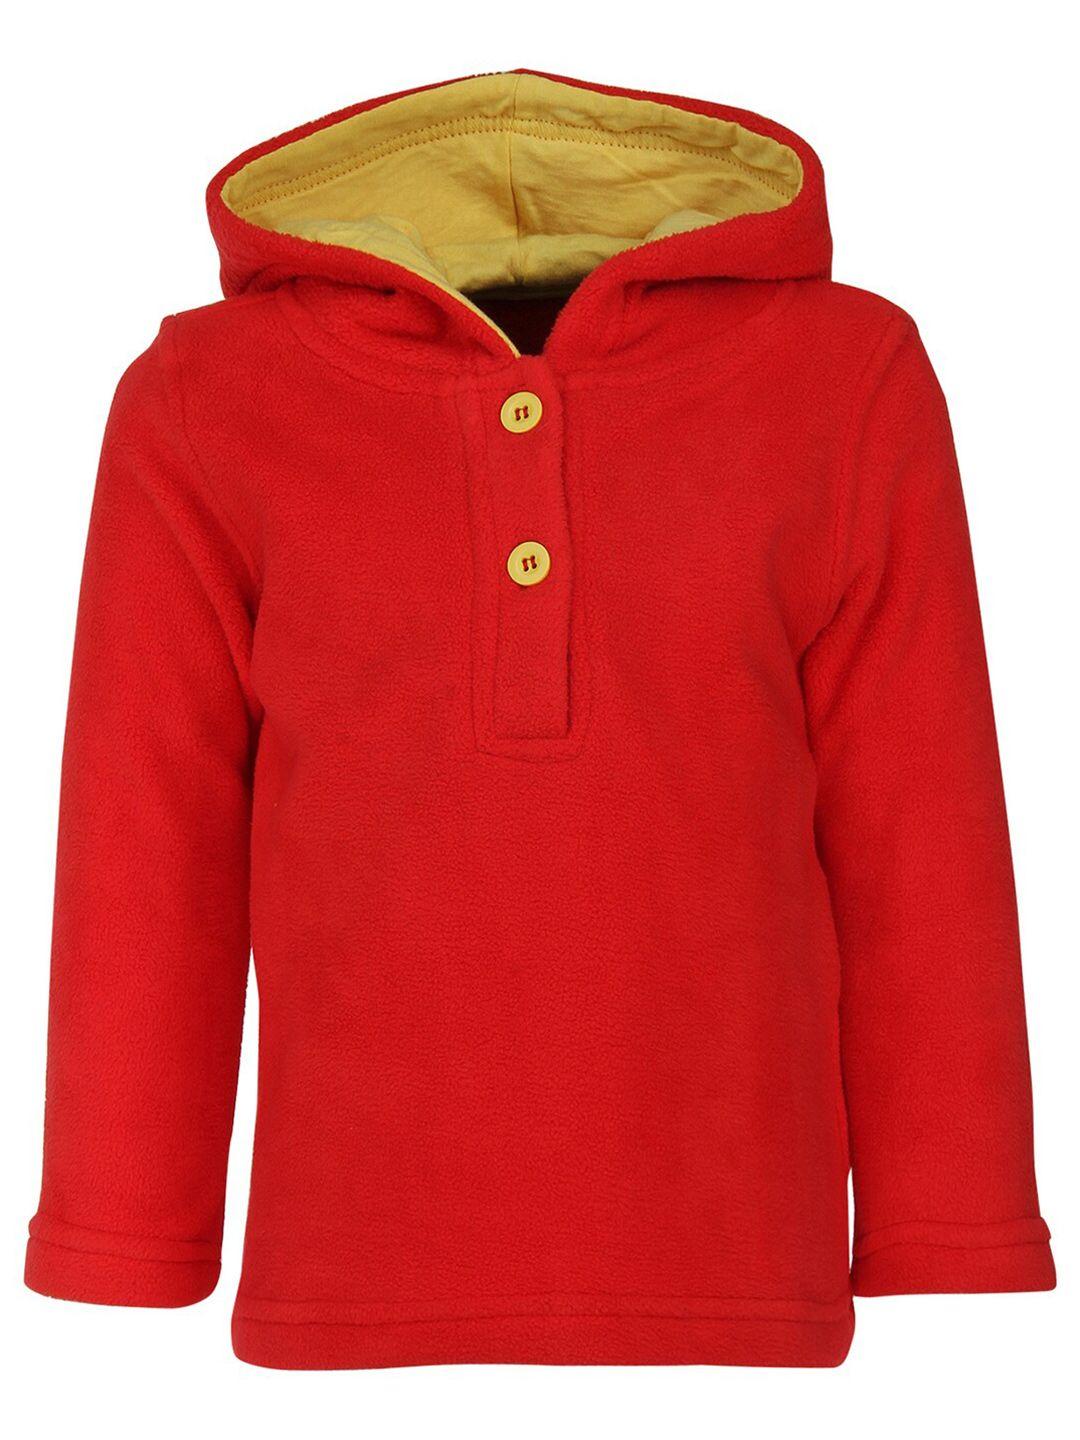 nino bambino kids red solid hooded sweatshirt